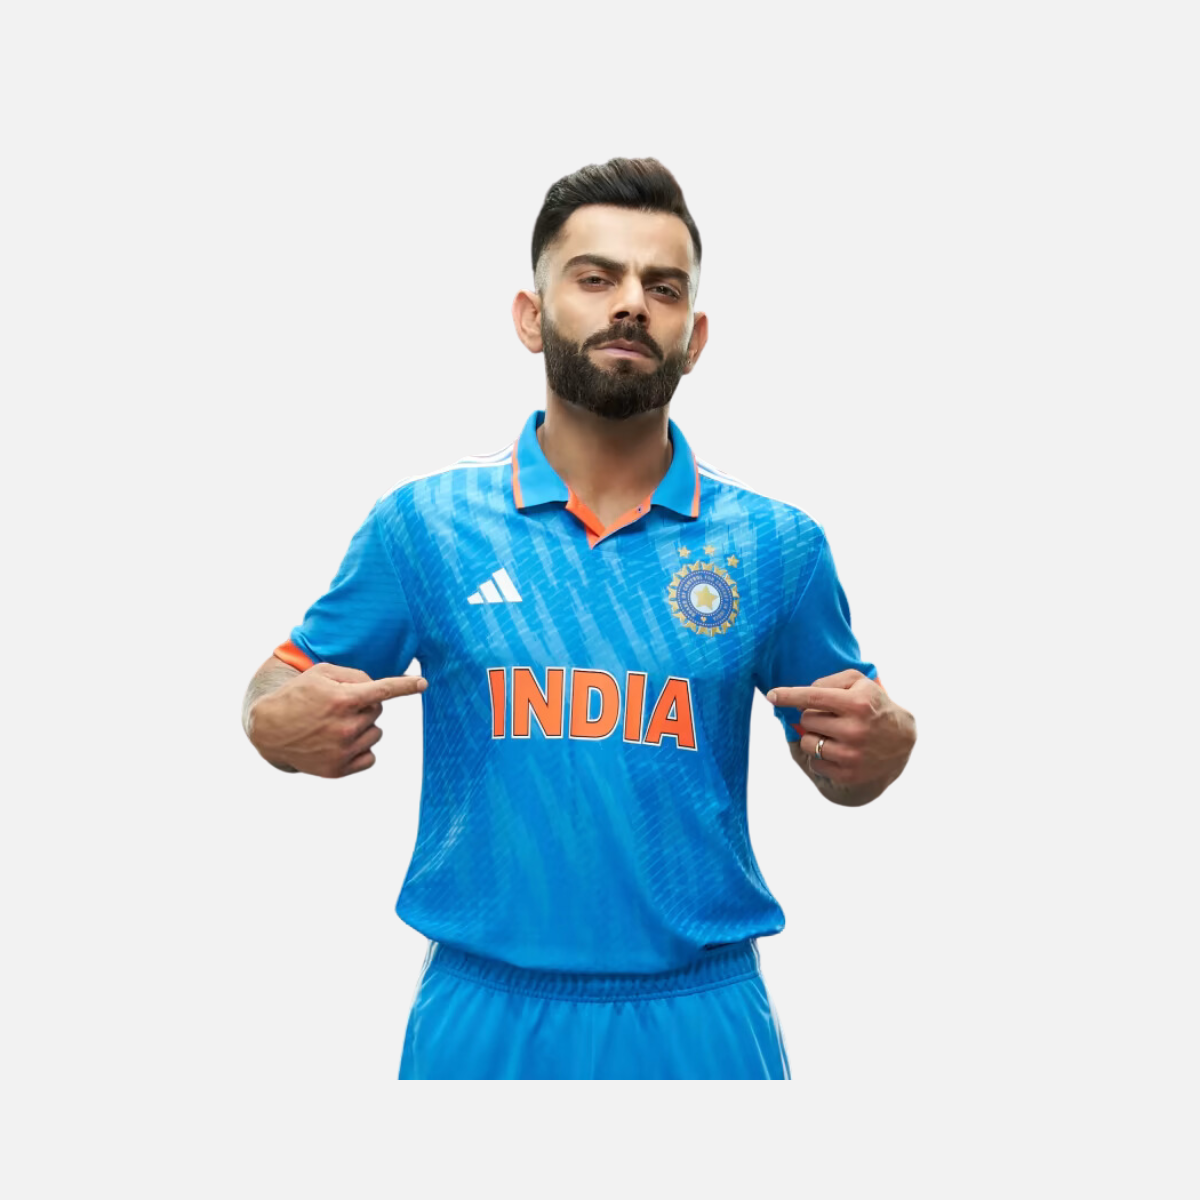 Adidas India Cricket Official Odi Men's T-shirt -Bright Blue